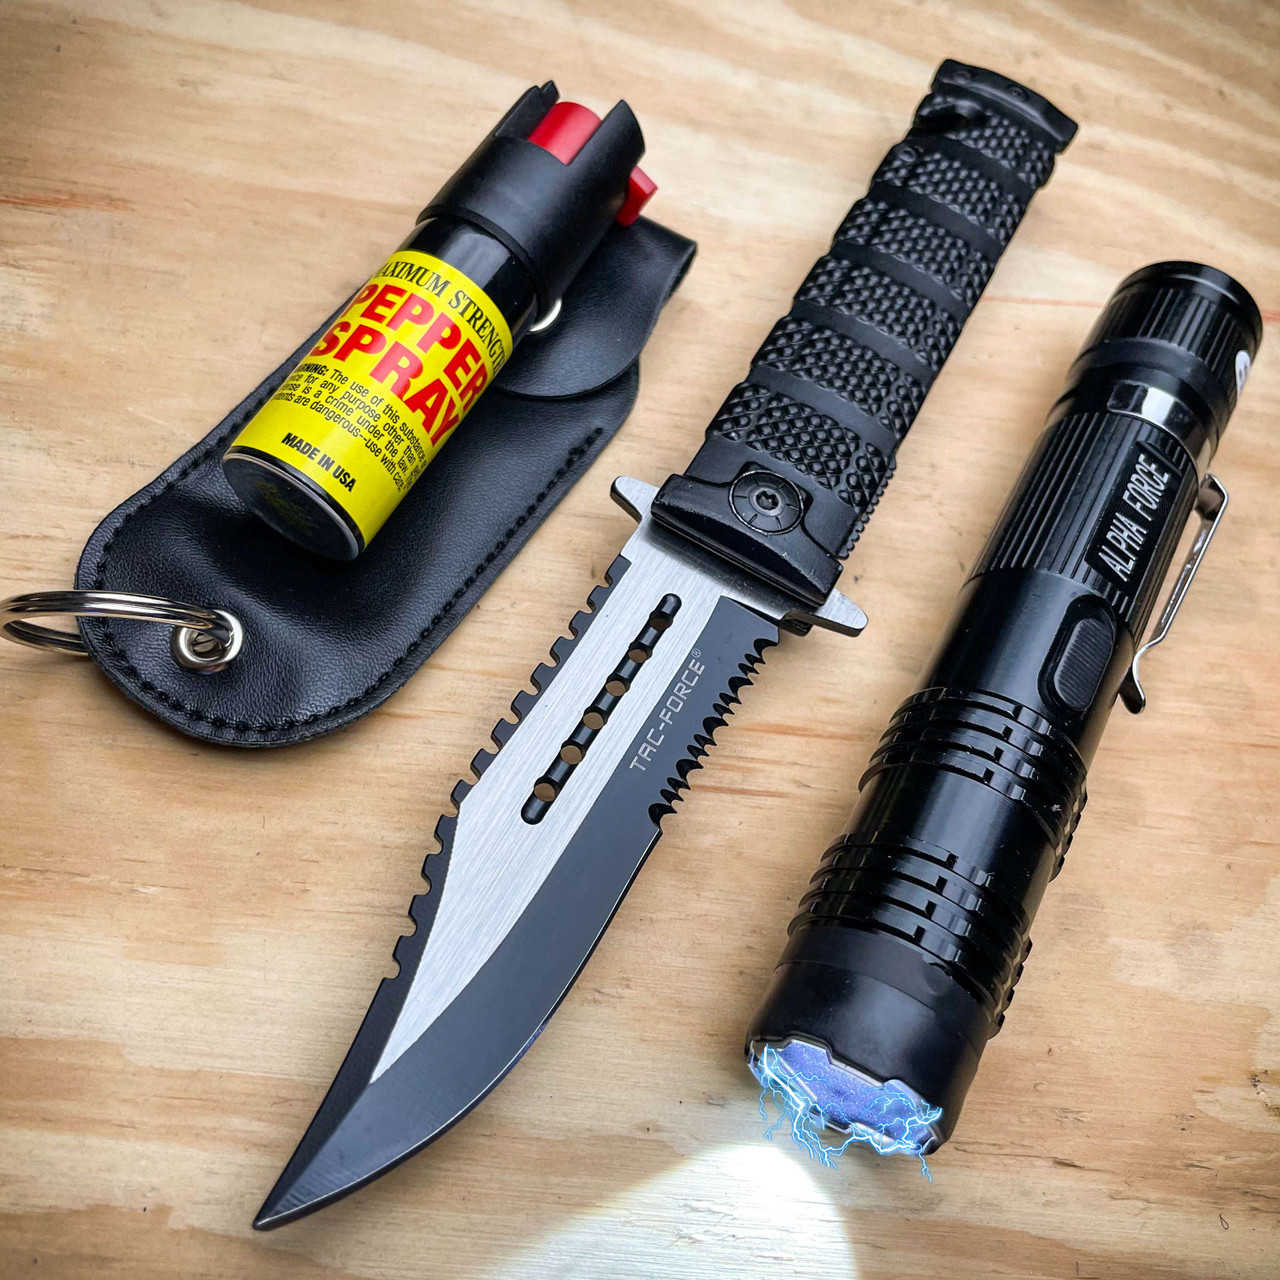 Kitchen knives, pocket knives, torches & binoculars